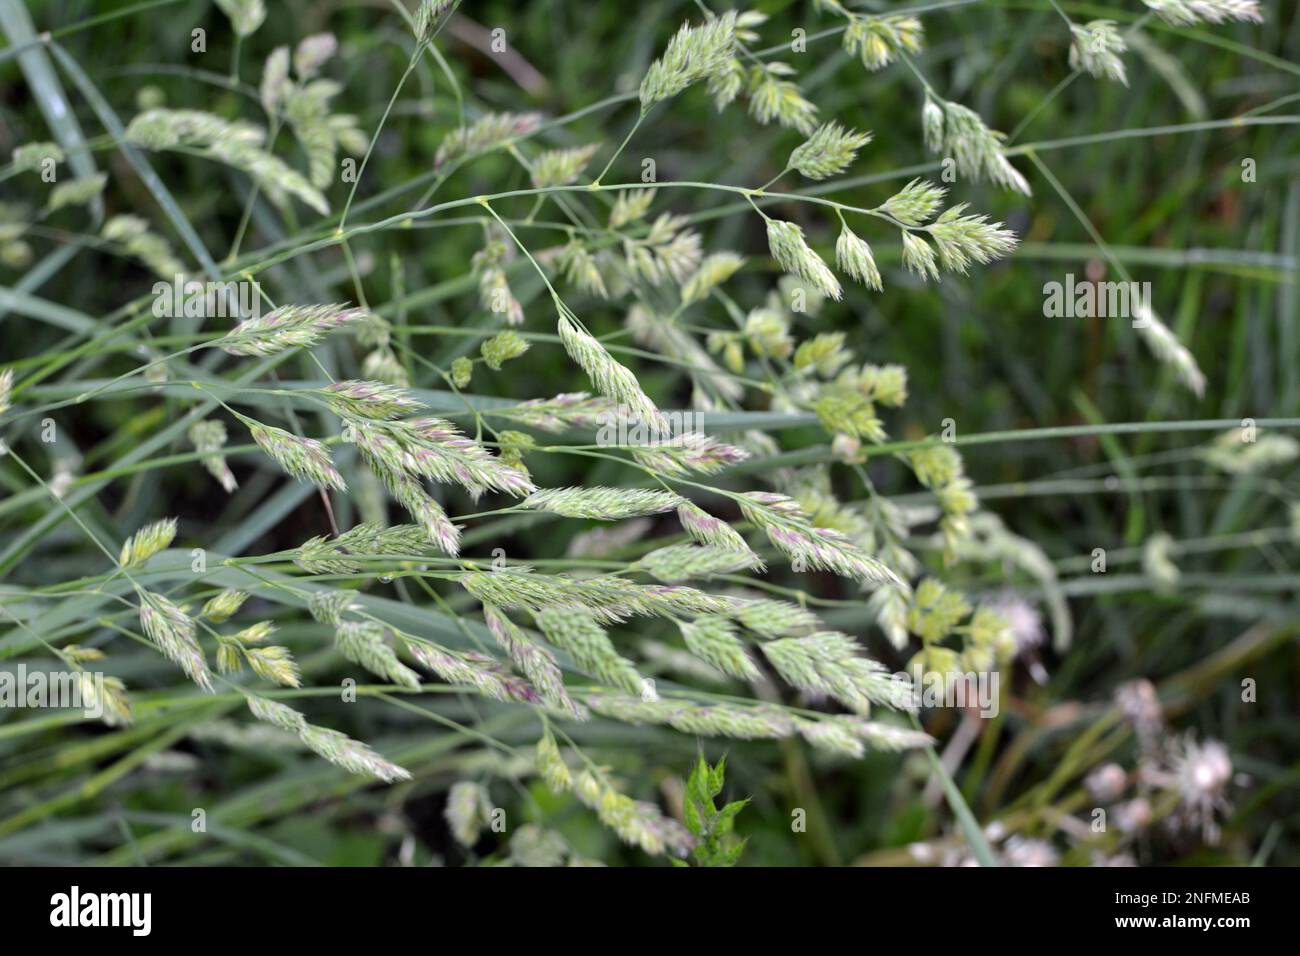 Valuable forage grass Dactylis glomerata grows in nature Stock Photo